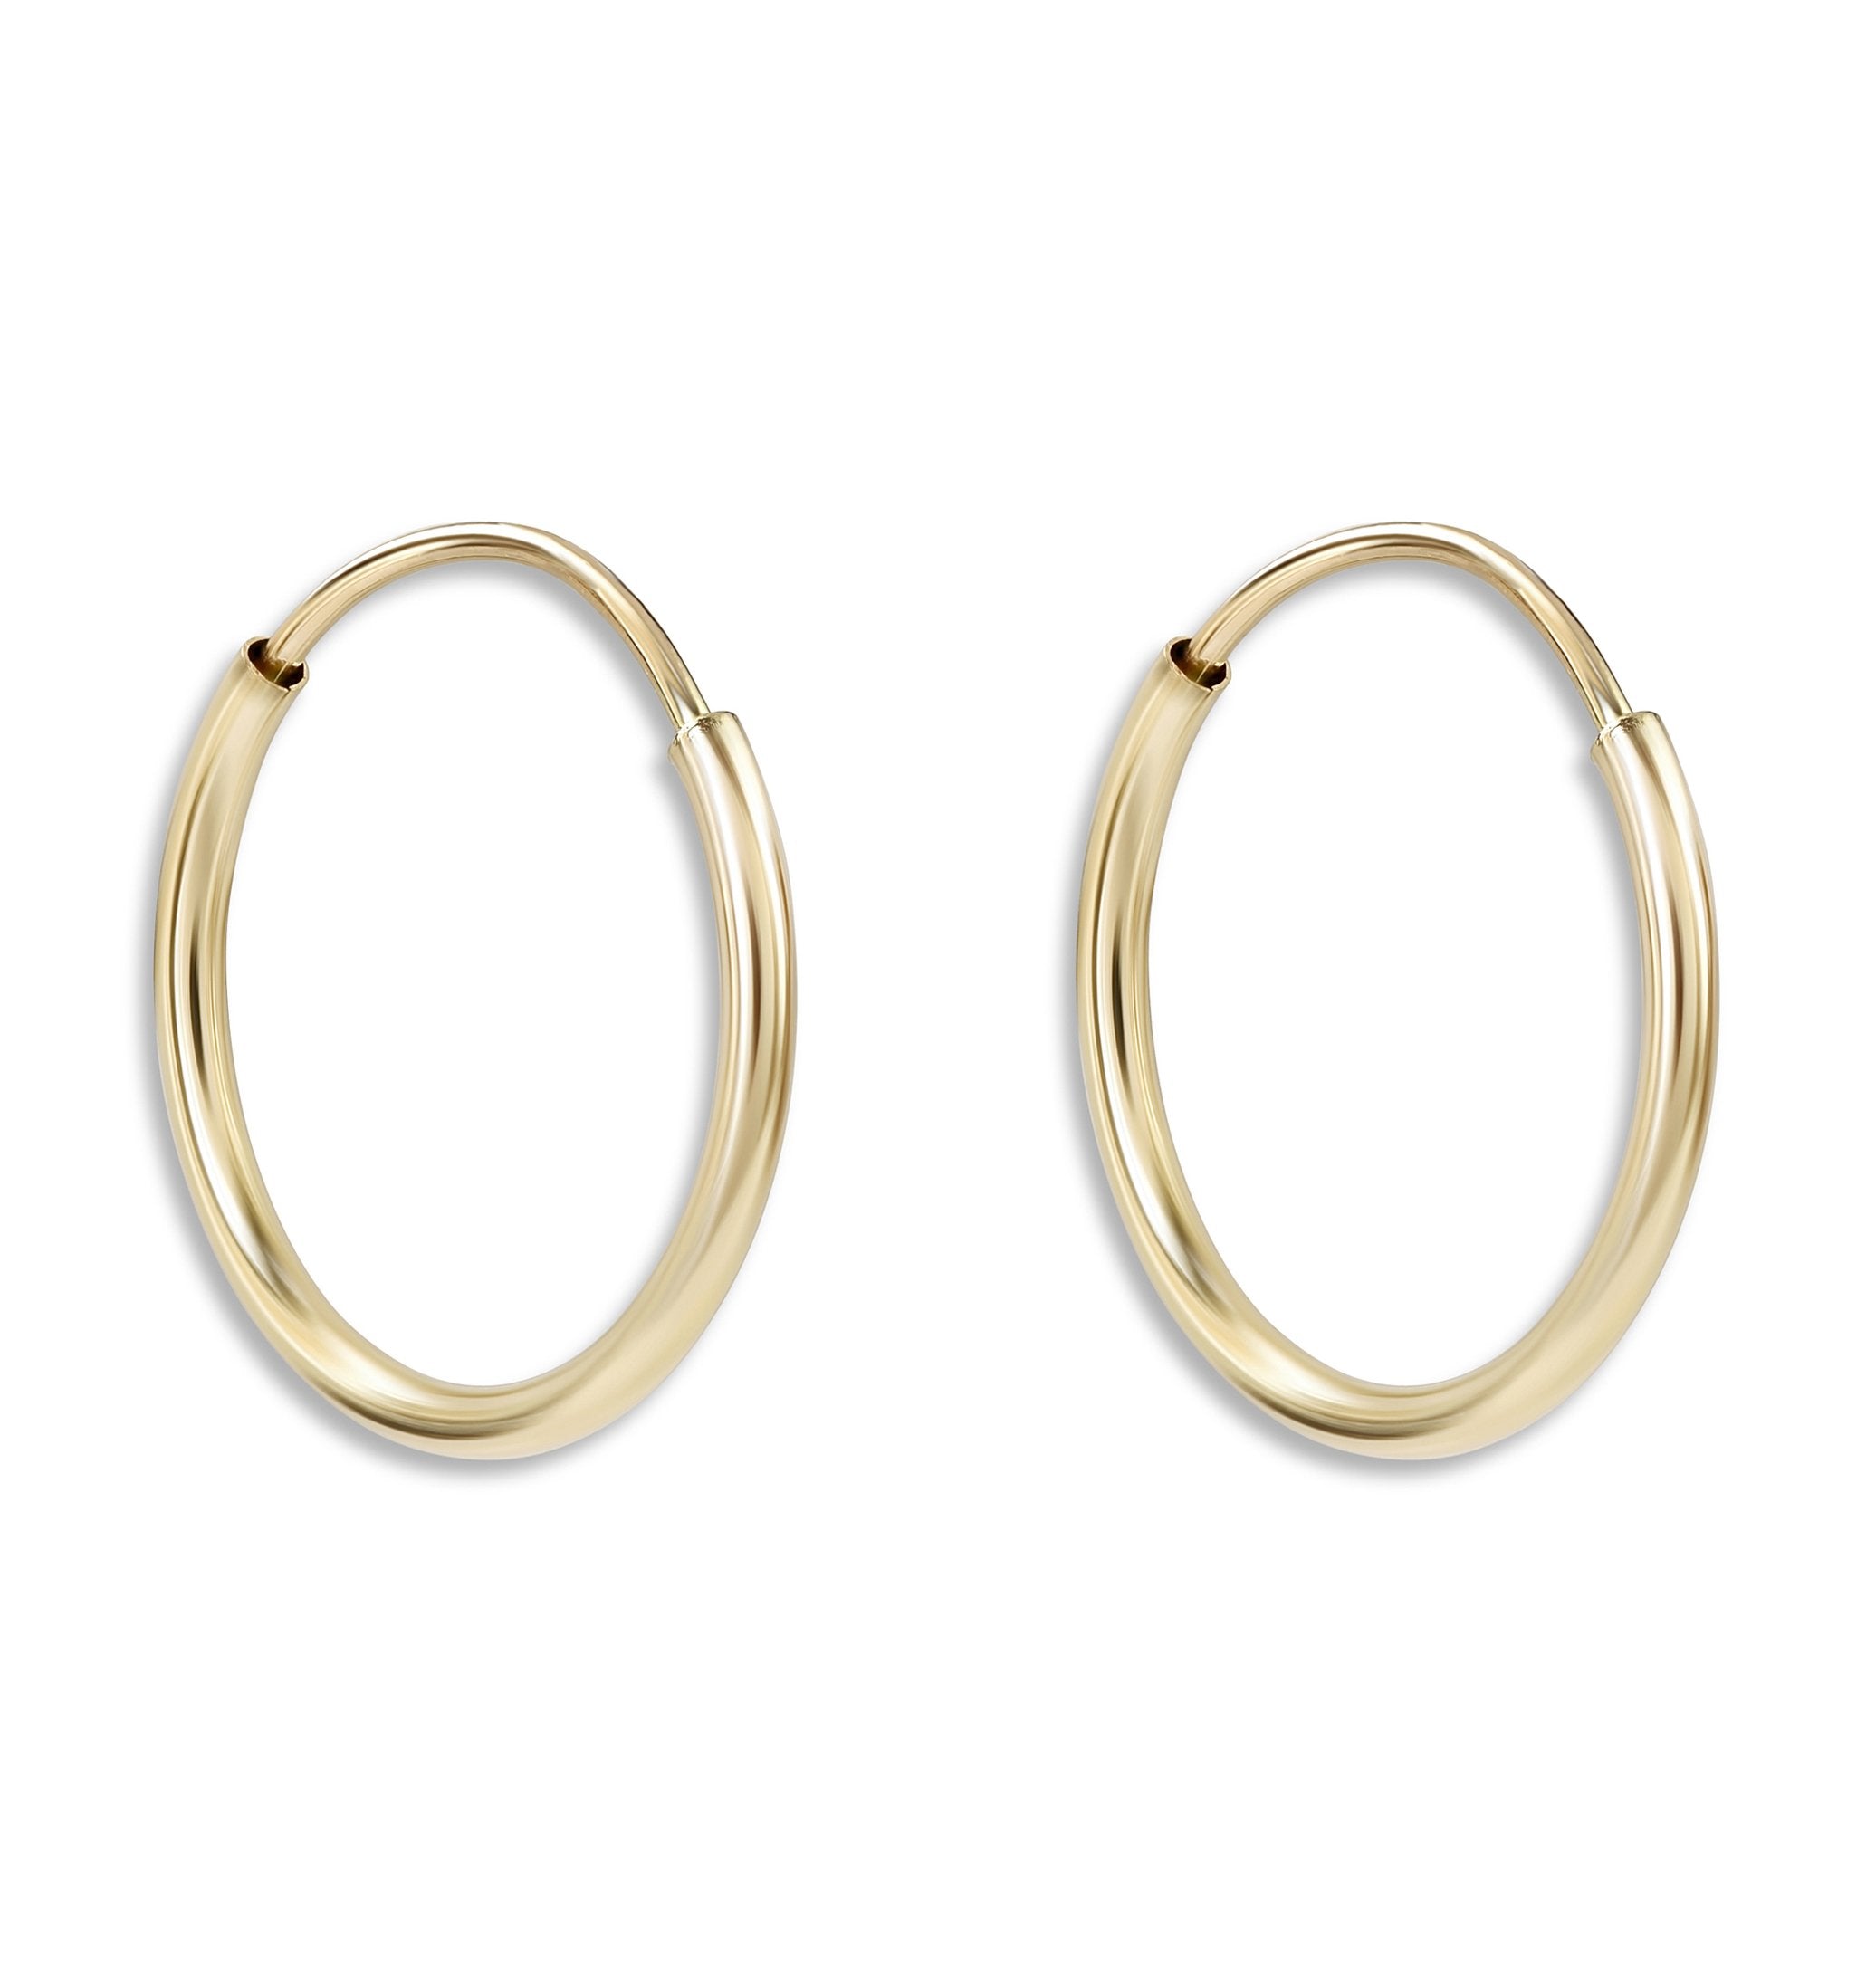 Thick Gold Hoop Earrings - 14K Solid Gold | Helen Ficalora 14K Yellow Gold / Single by Helen Ficalora